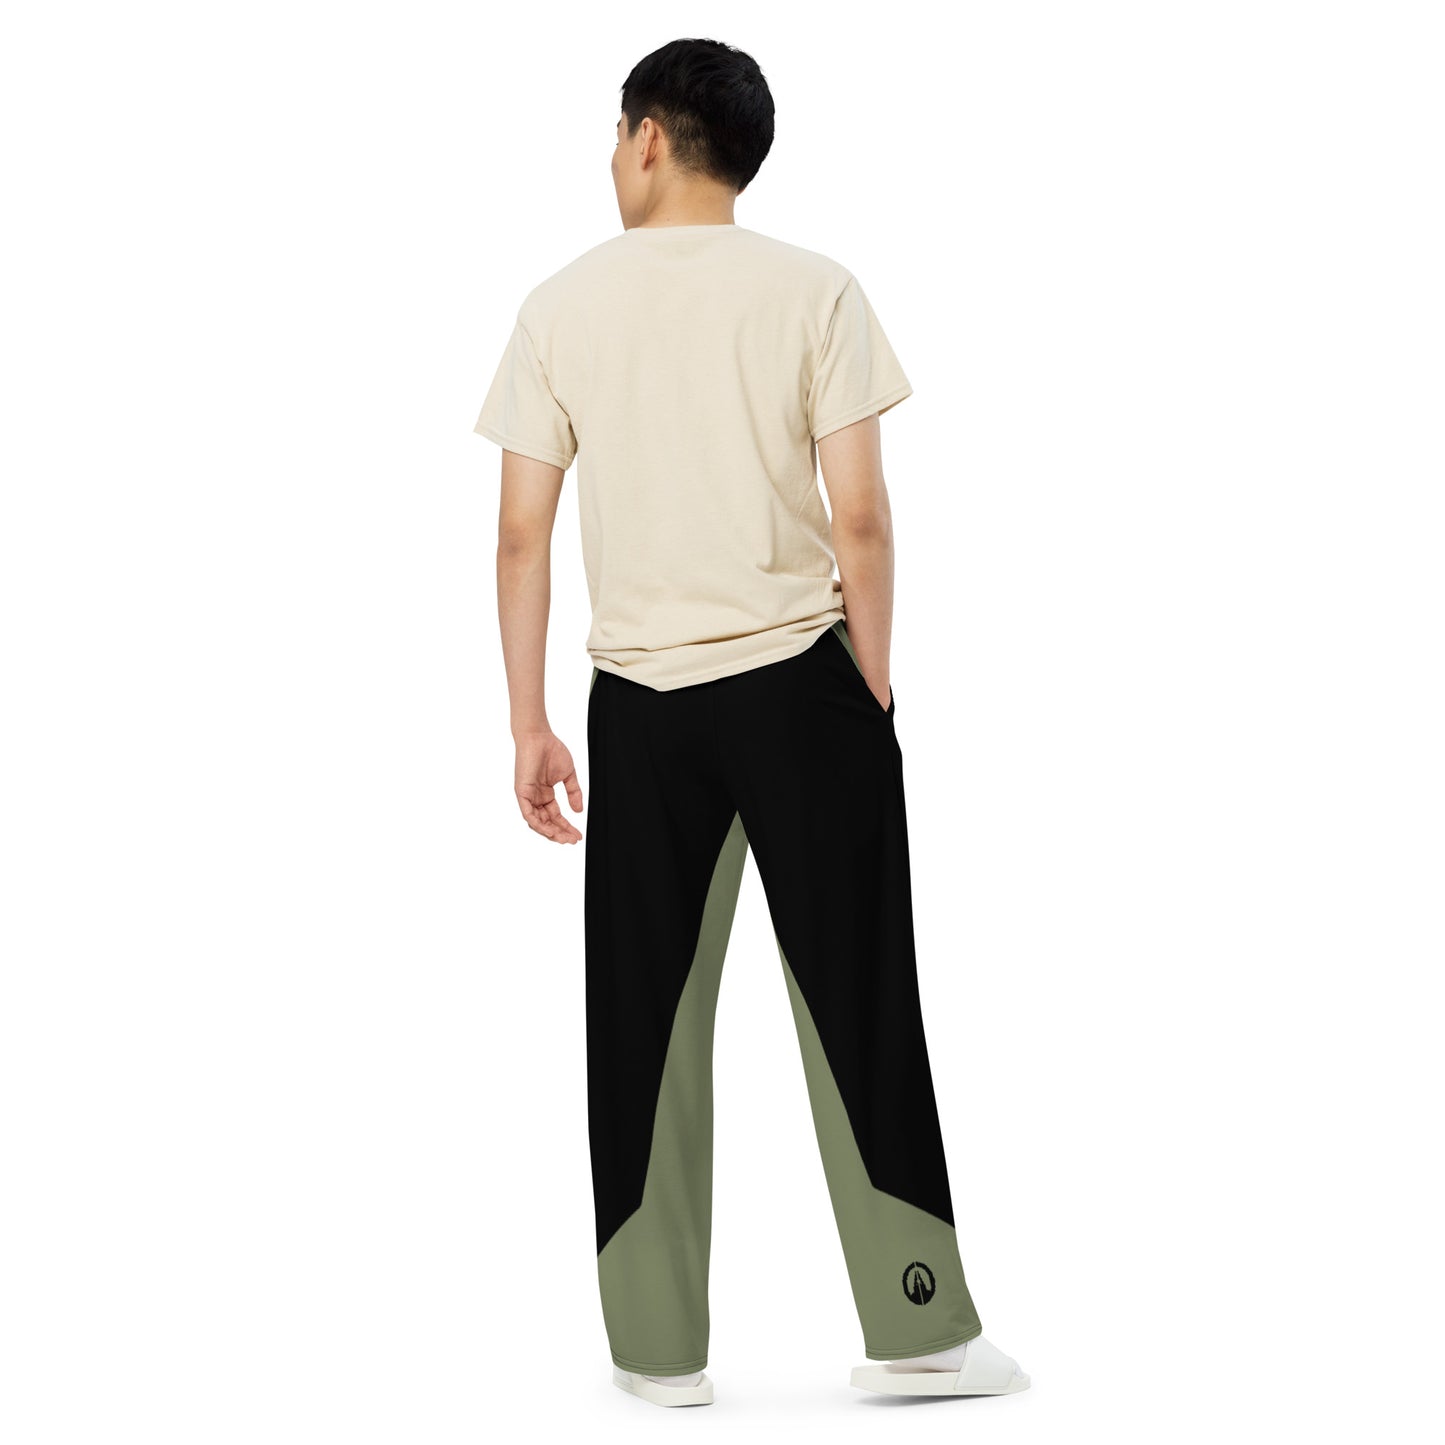 Unisex wide-leg pants - GFinch